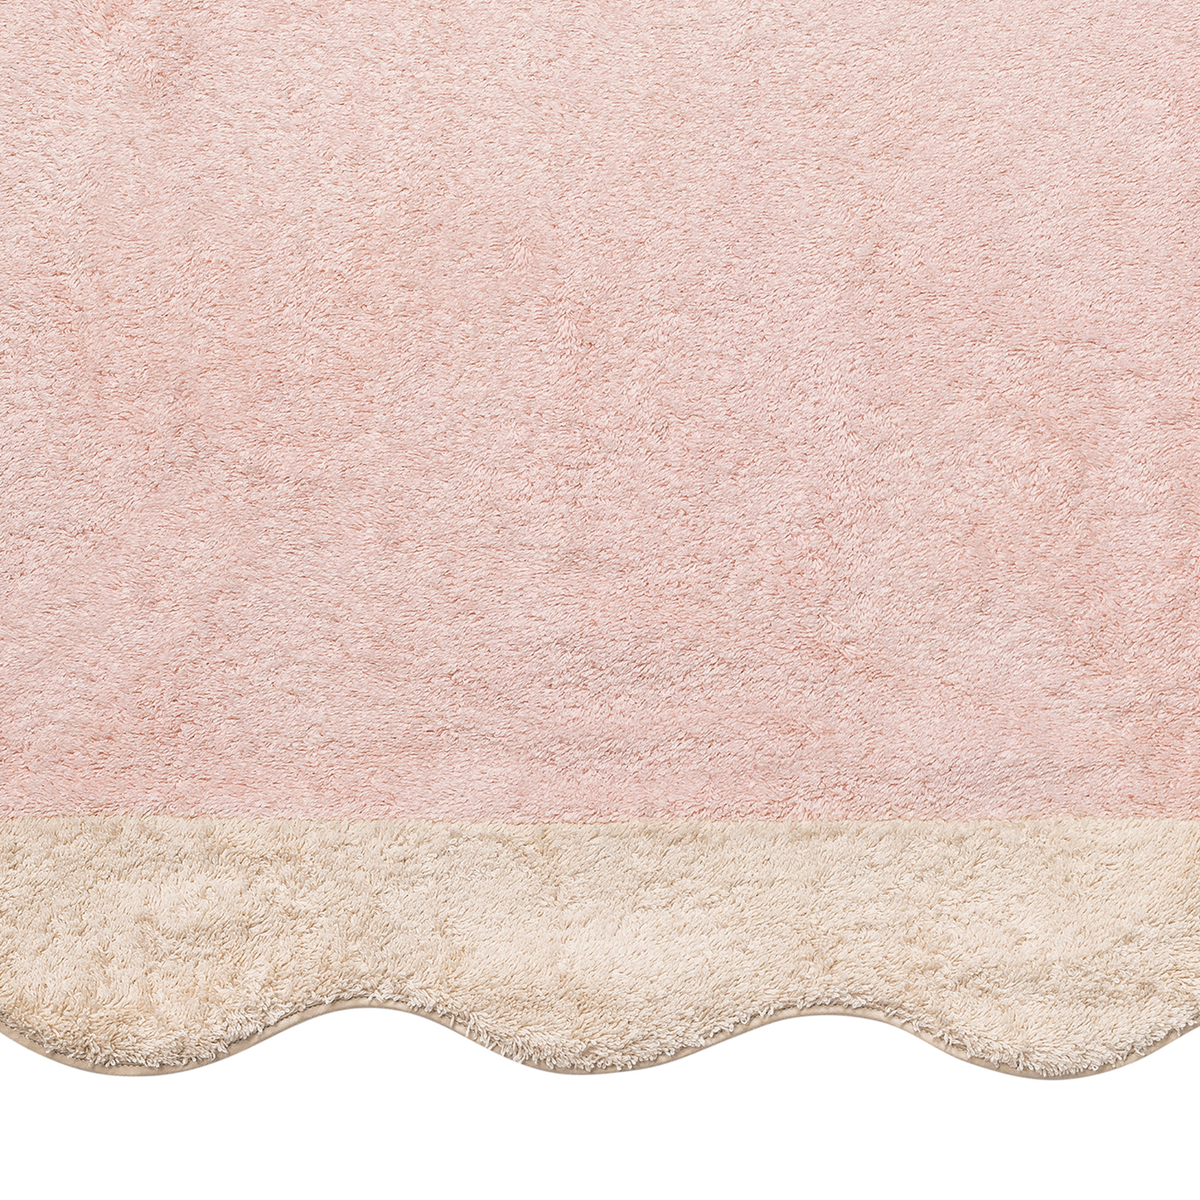 Fabric Closeup of Matouk Neptune Beach Towels in Blush/Sand Color